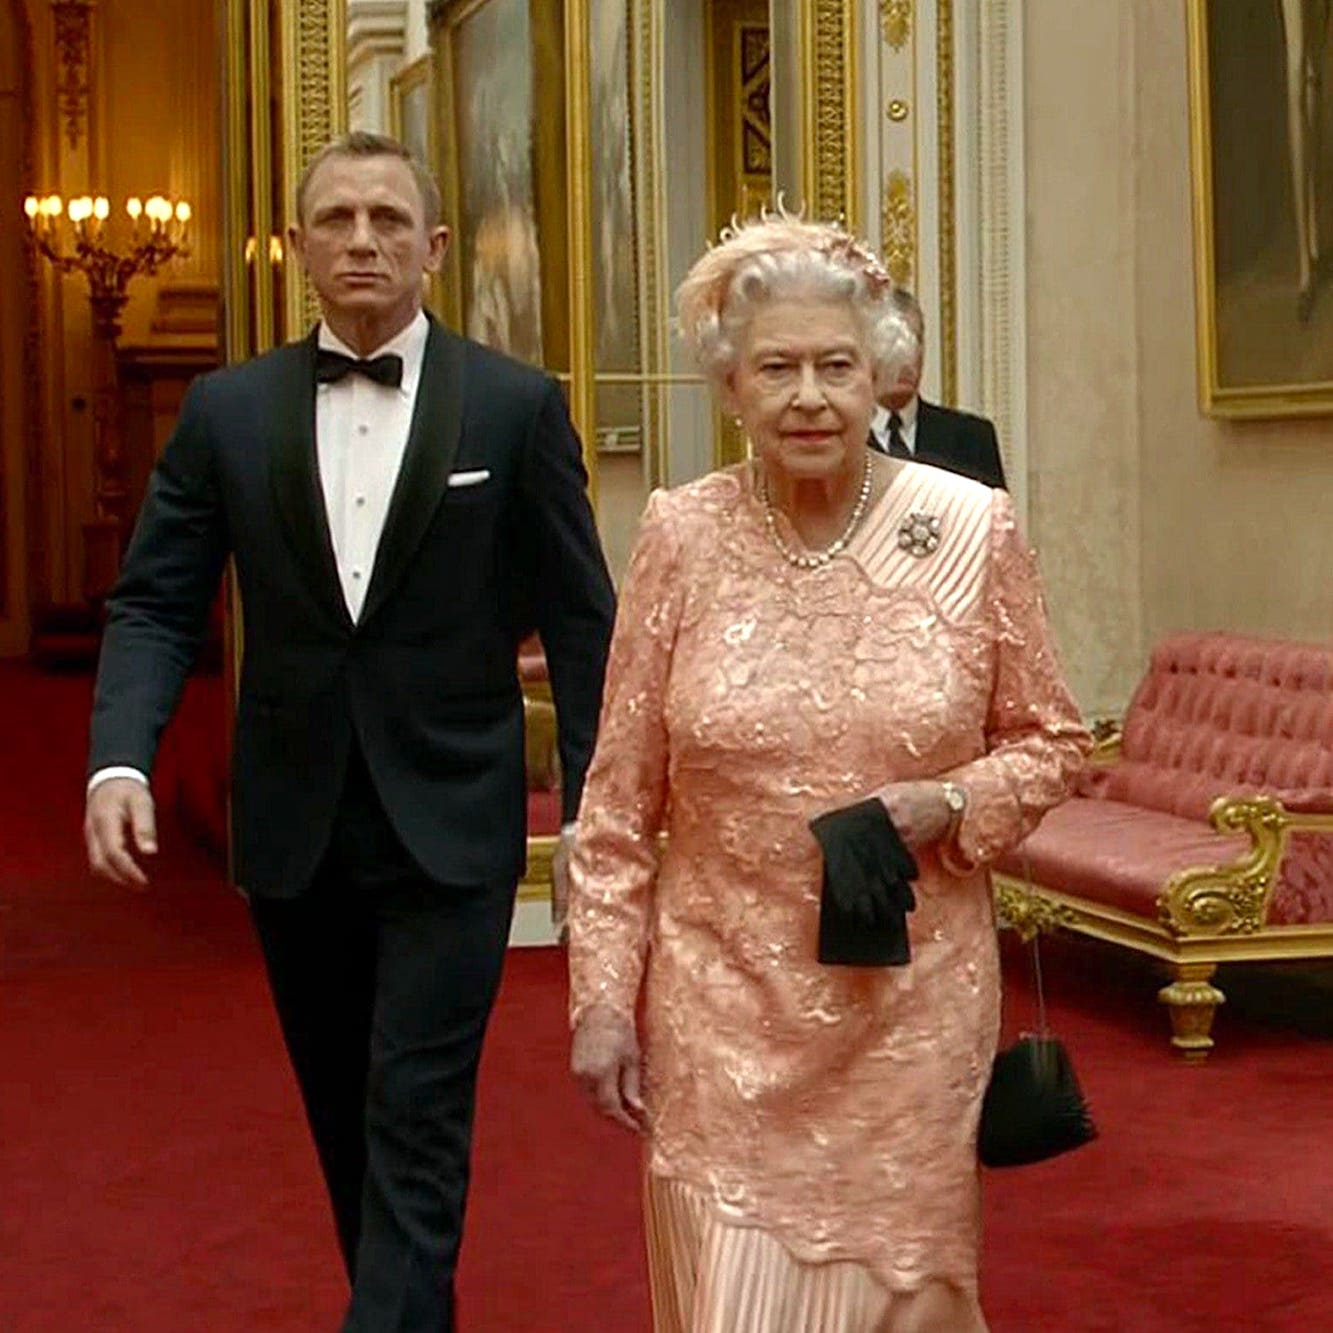 Queen Elizabeth and Daniel Craig 007 London Olympics 2012 - helicopter stunt